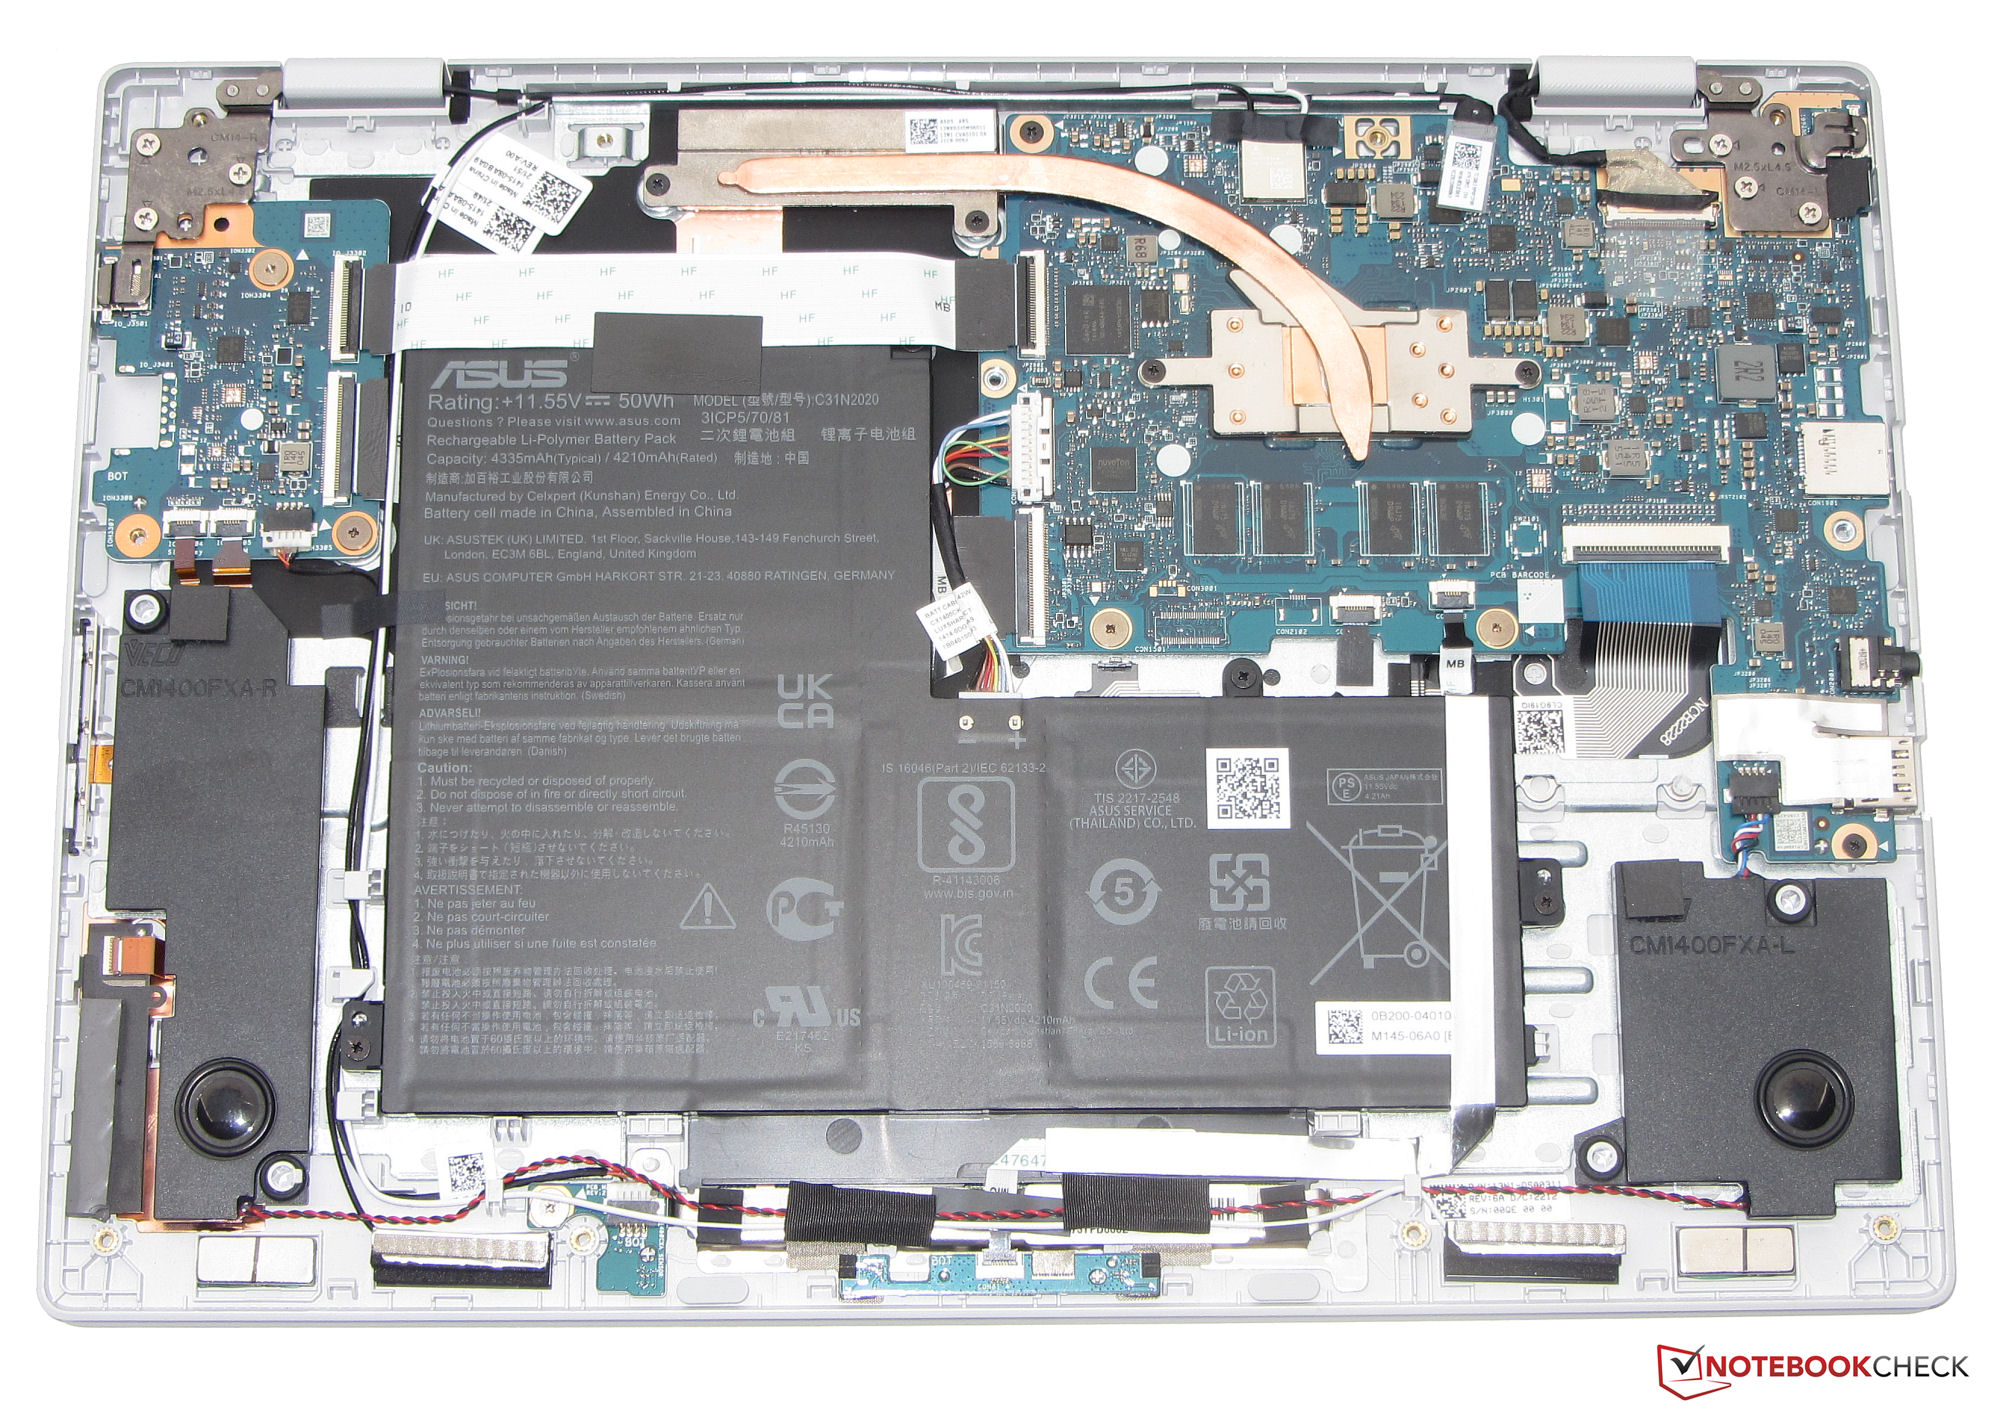 ASUS Chromebook Flip CM1(CM1400) - Asus Spain